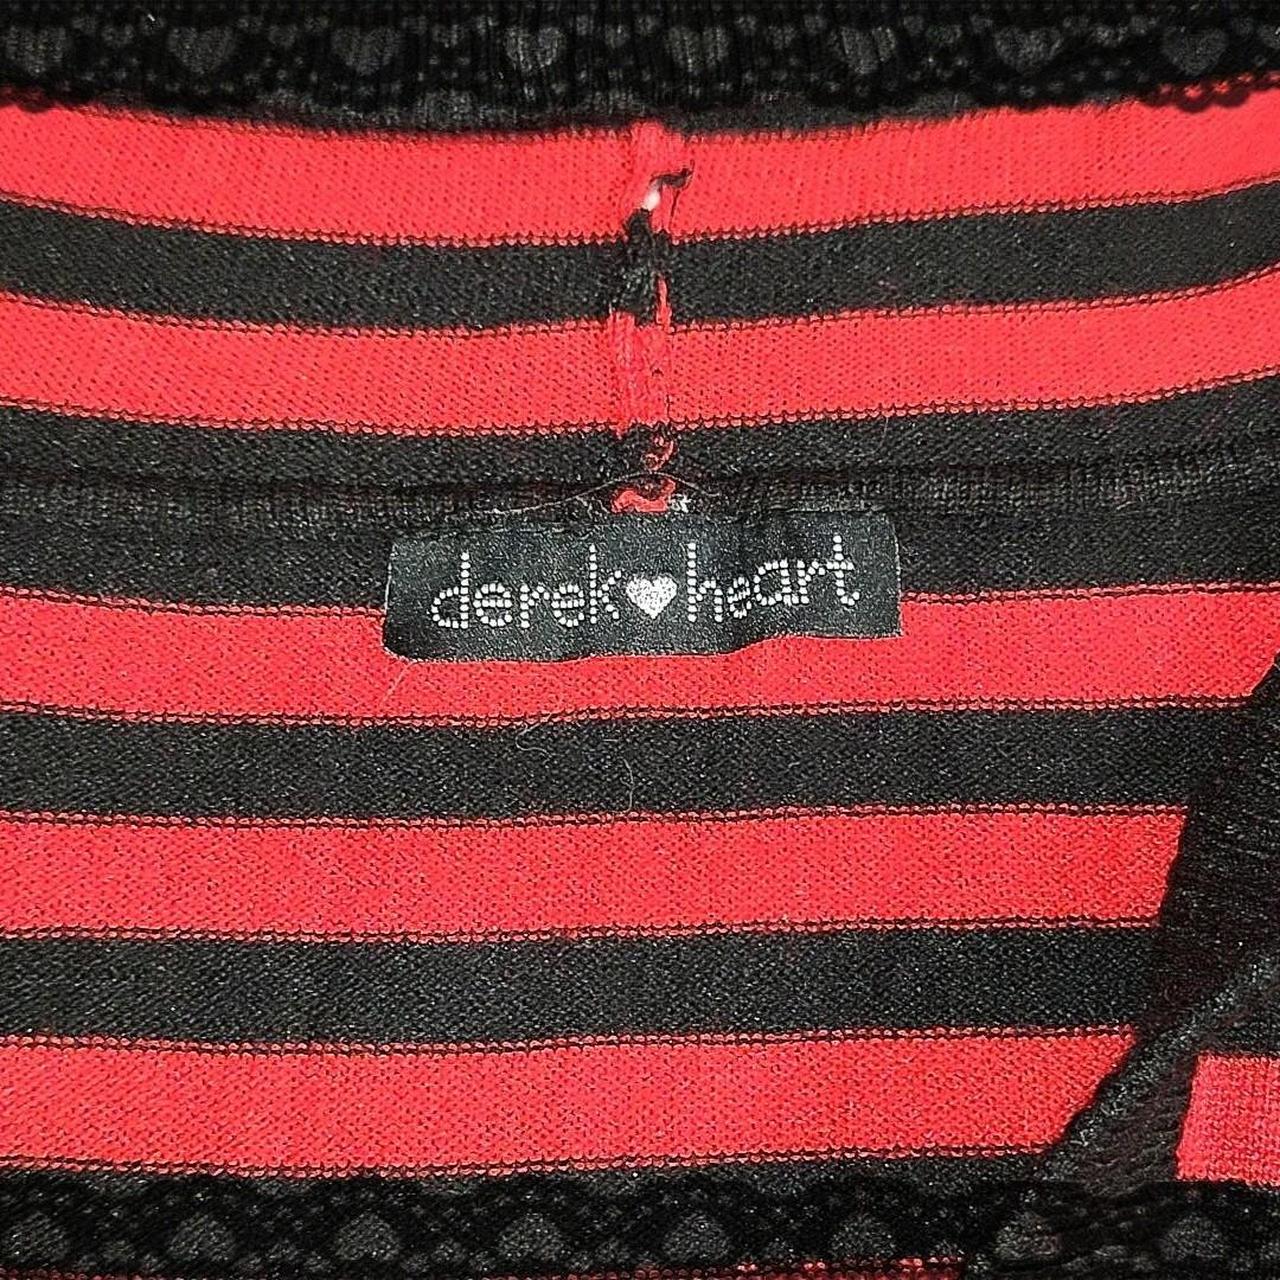 Super cute jersey style top by Derek Heart Red with - Depop